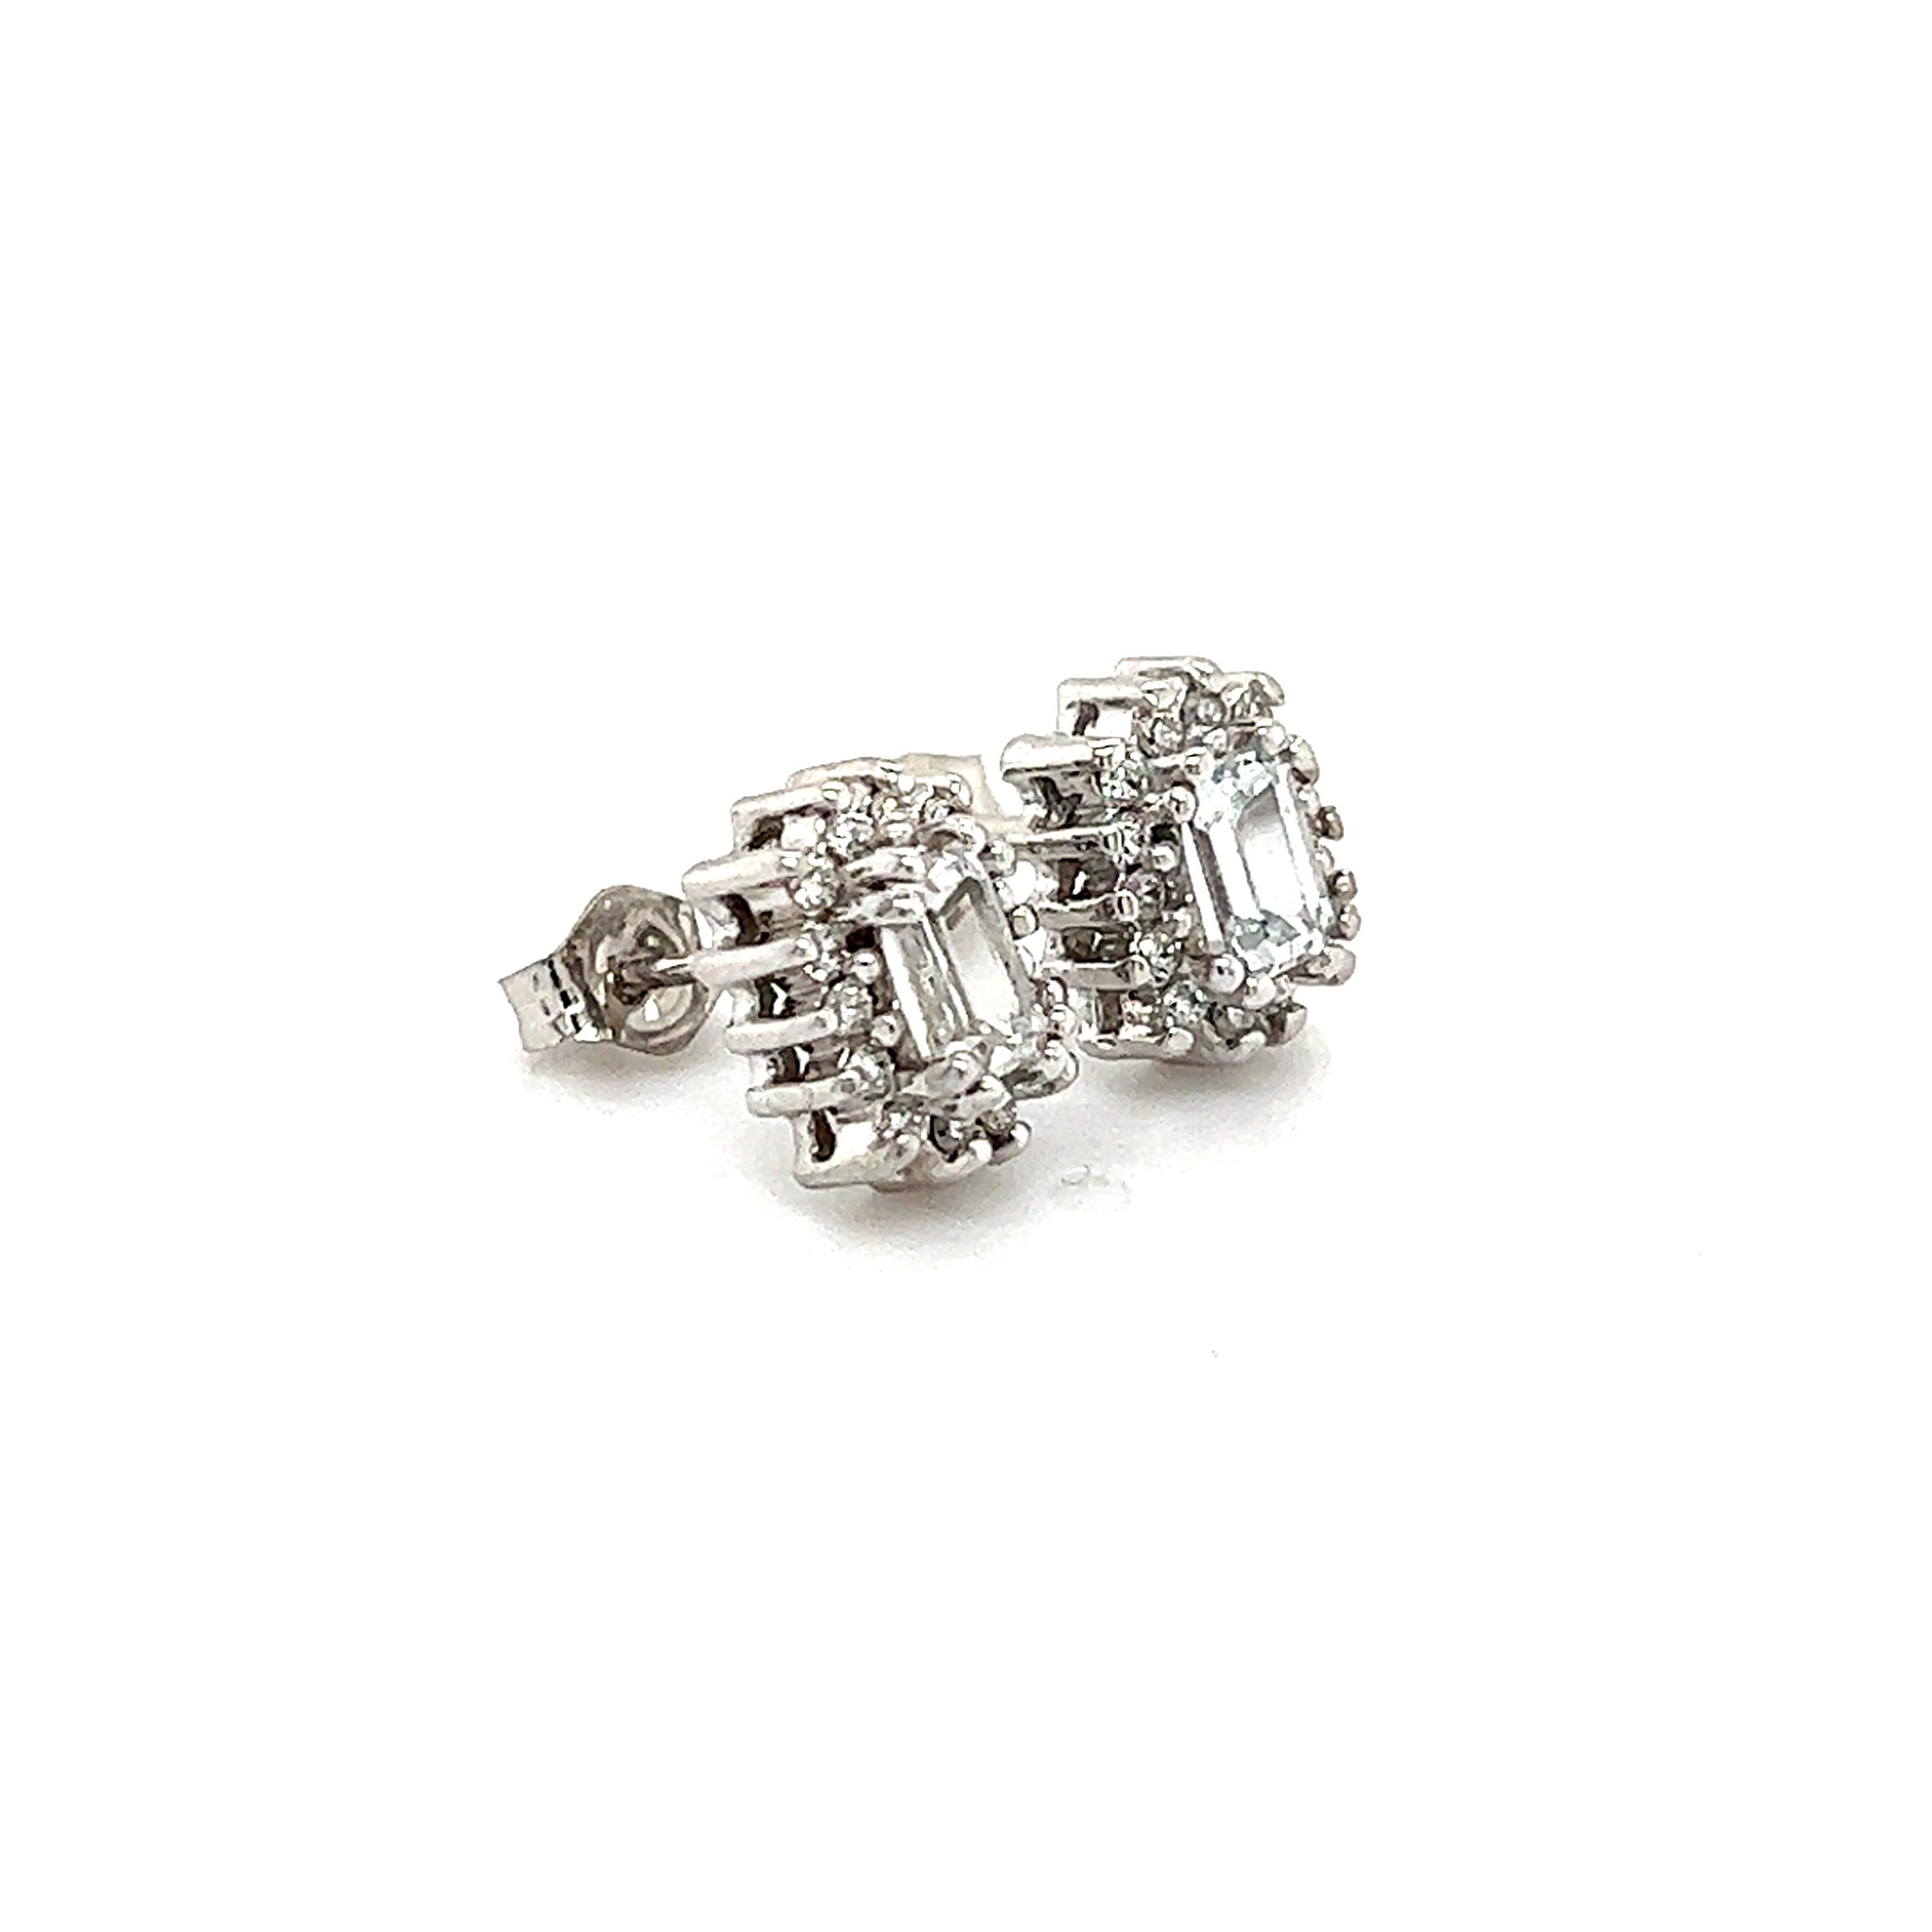 Natural Sapphire Diamond Stud Earrings 14k W Gold 0.94 TCW Certified For Sale 2